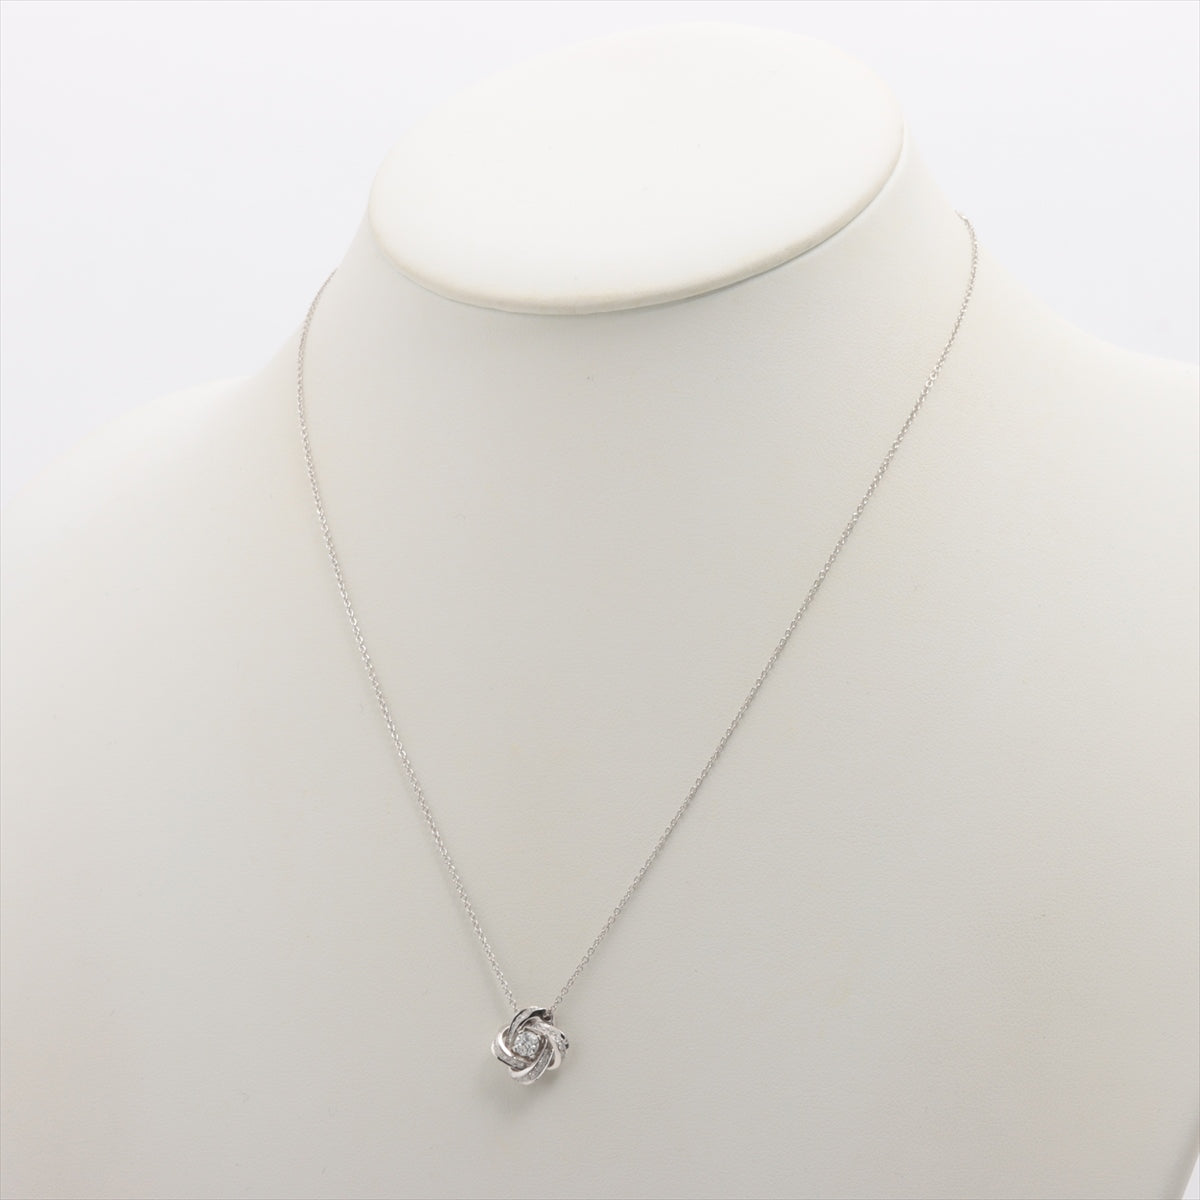 Boucheron Ava Pivoine diamond Necklace 750(WG) 3.4g Diamond diameter about 3.61 mm